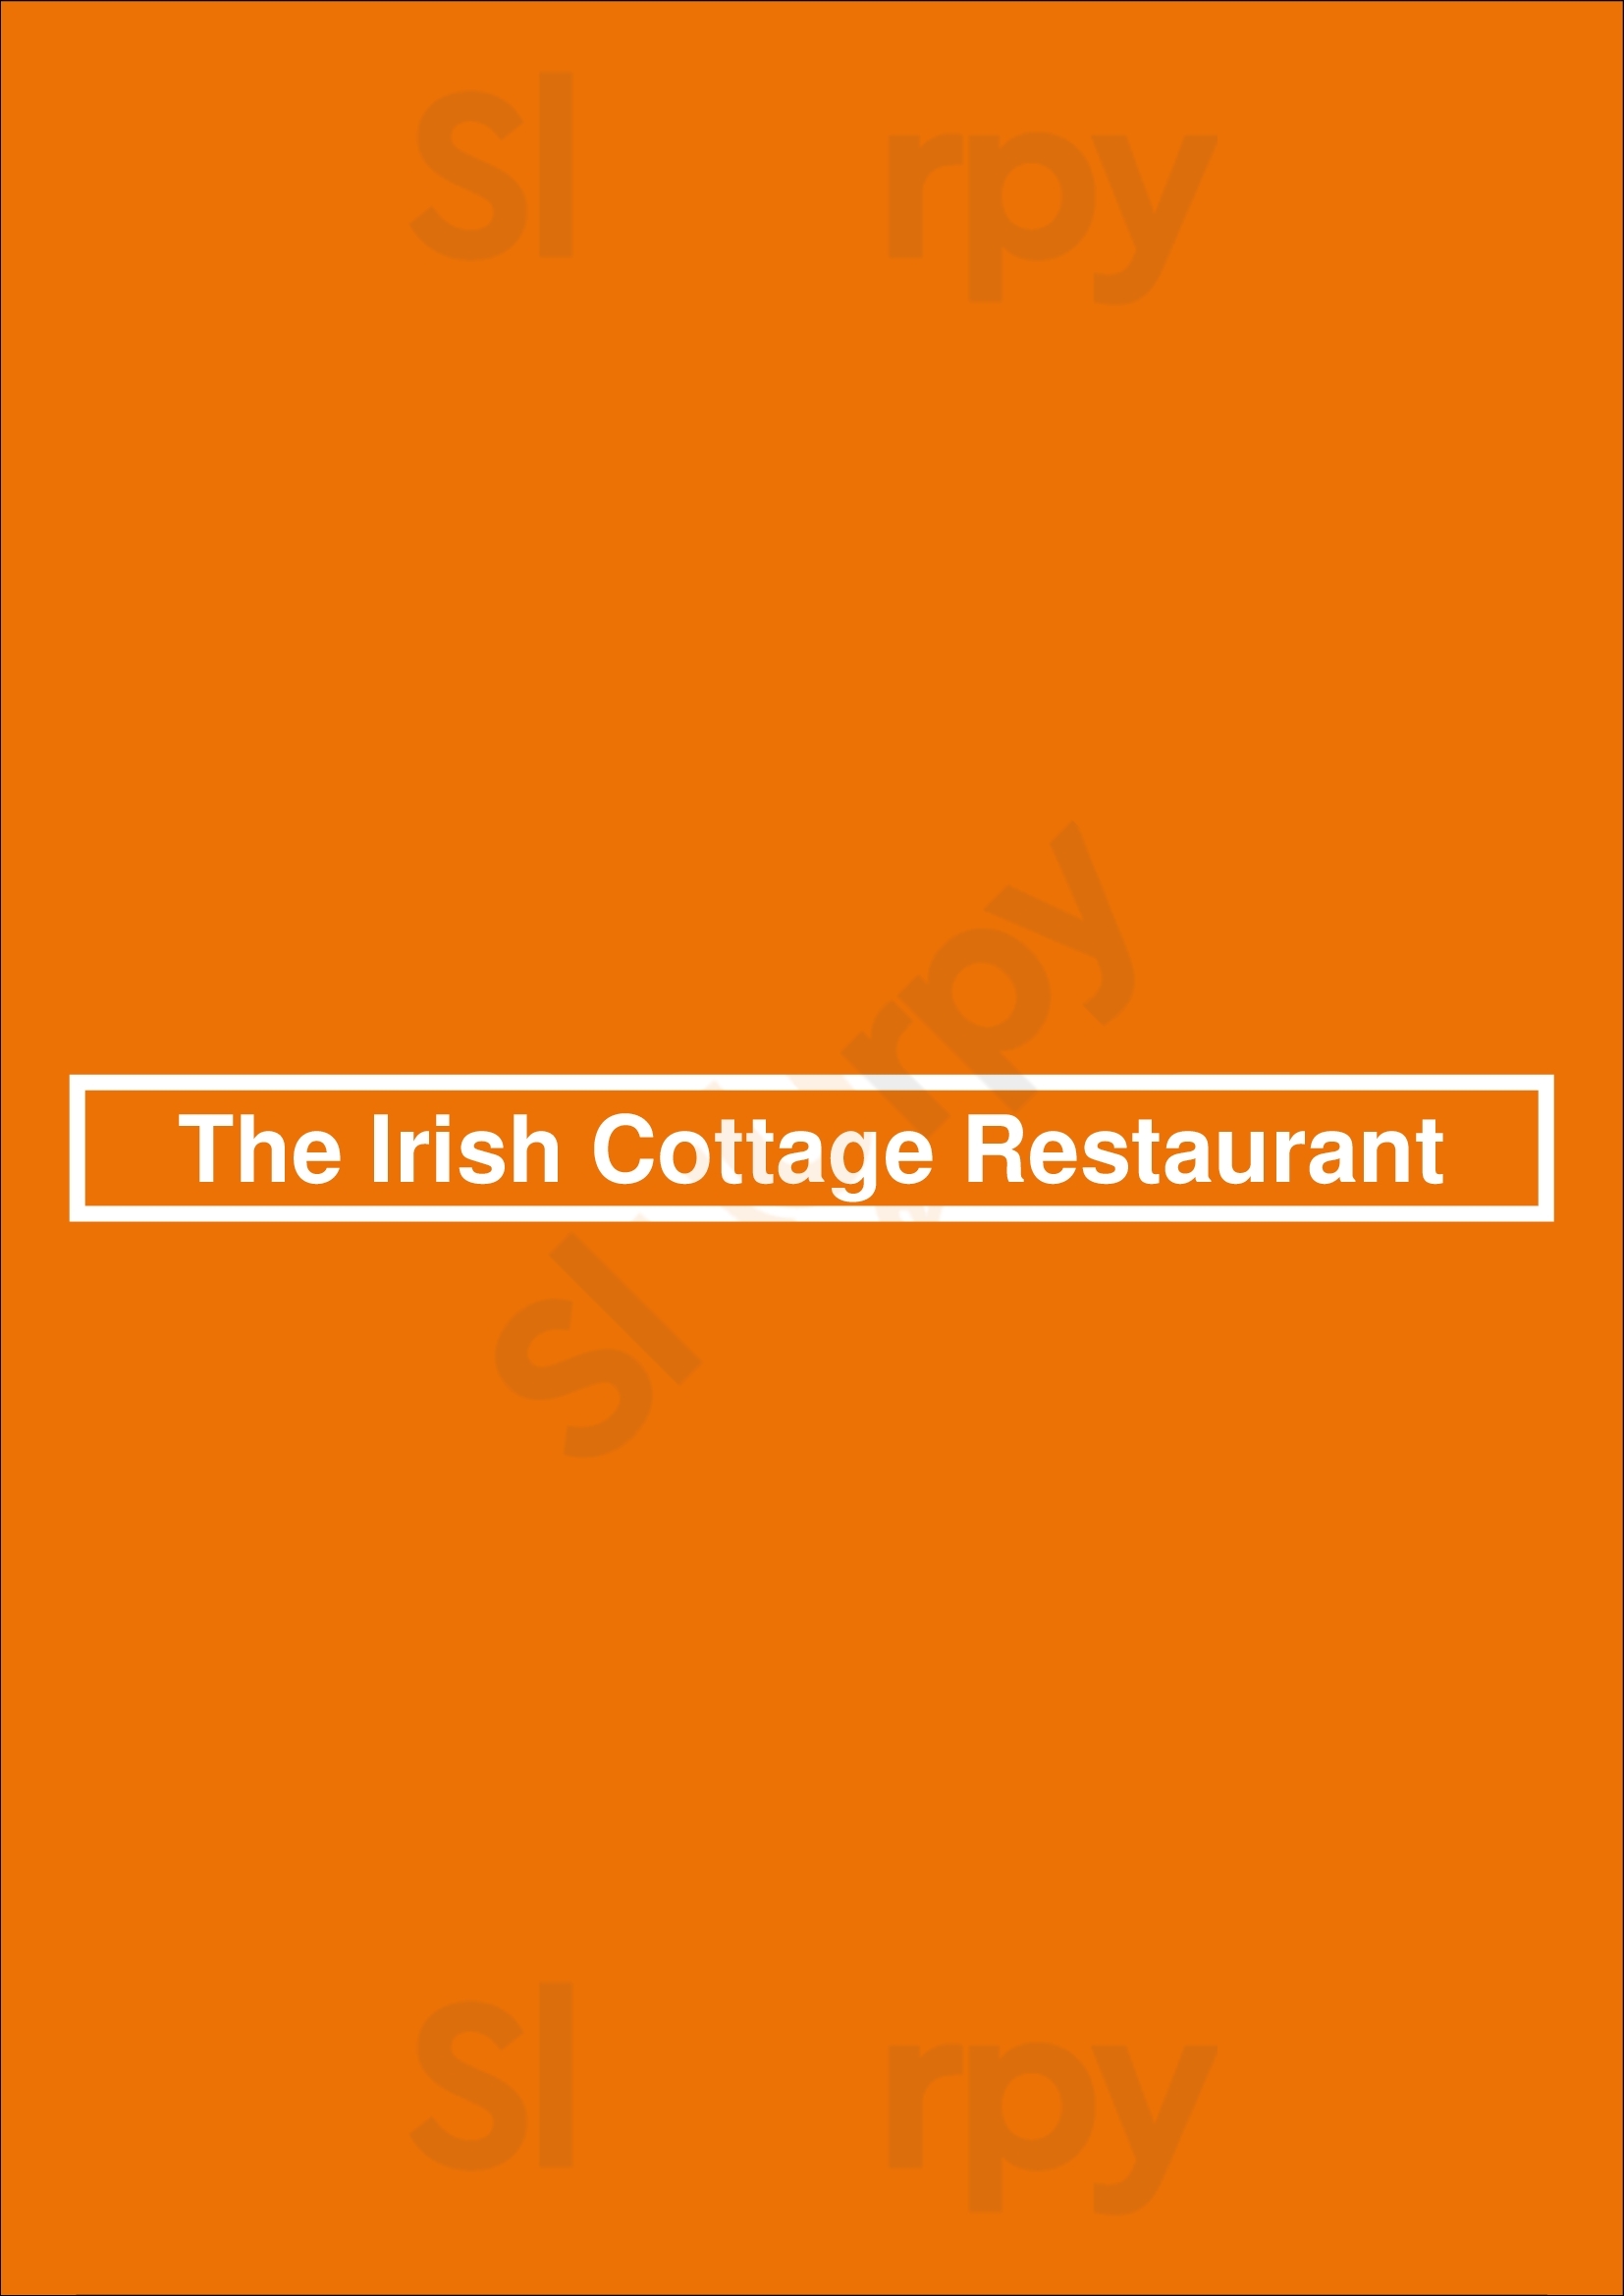 The Irish Cottage Restaurant Oude Niedorp Menu - 1